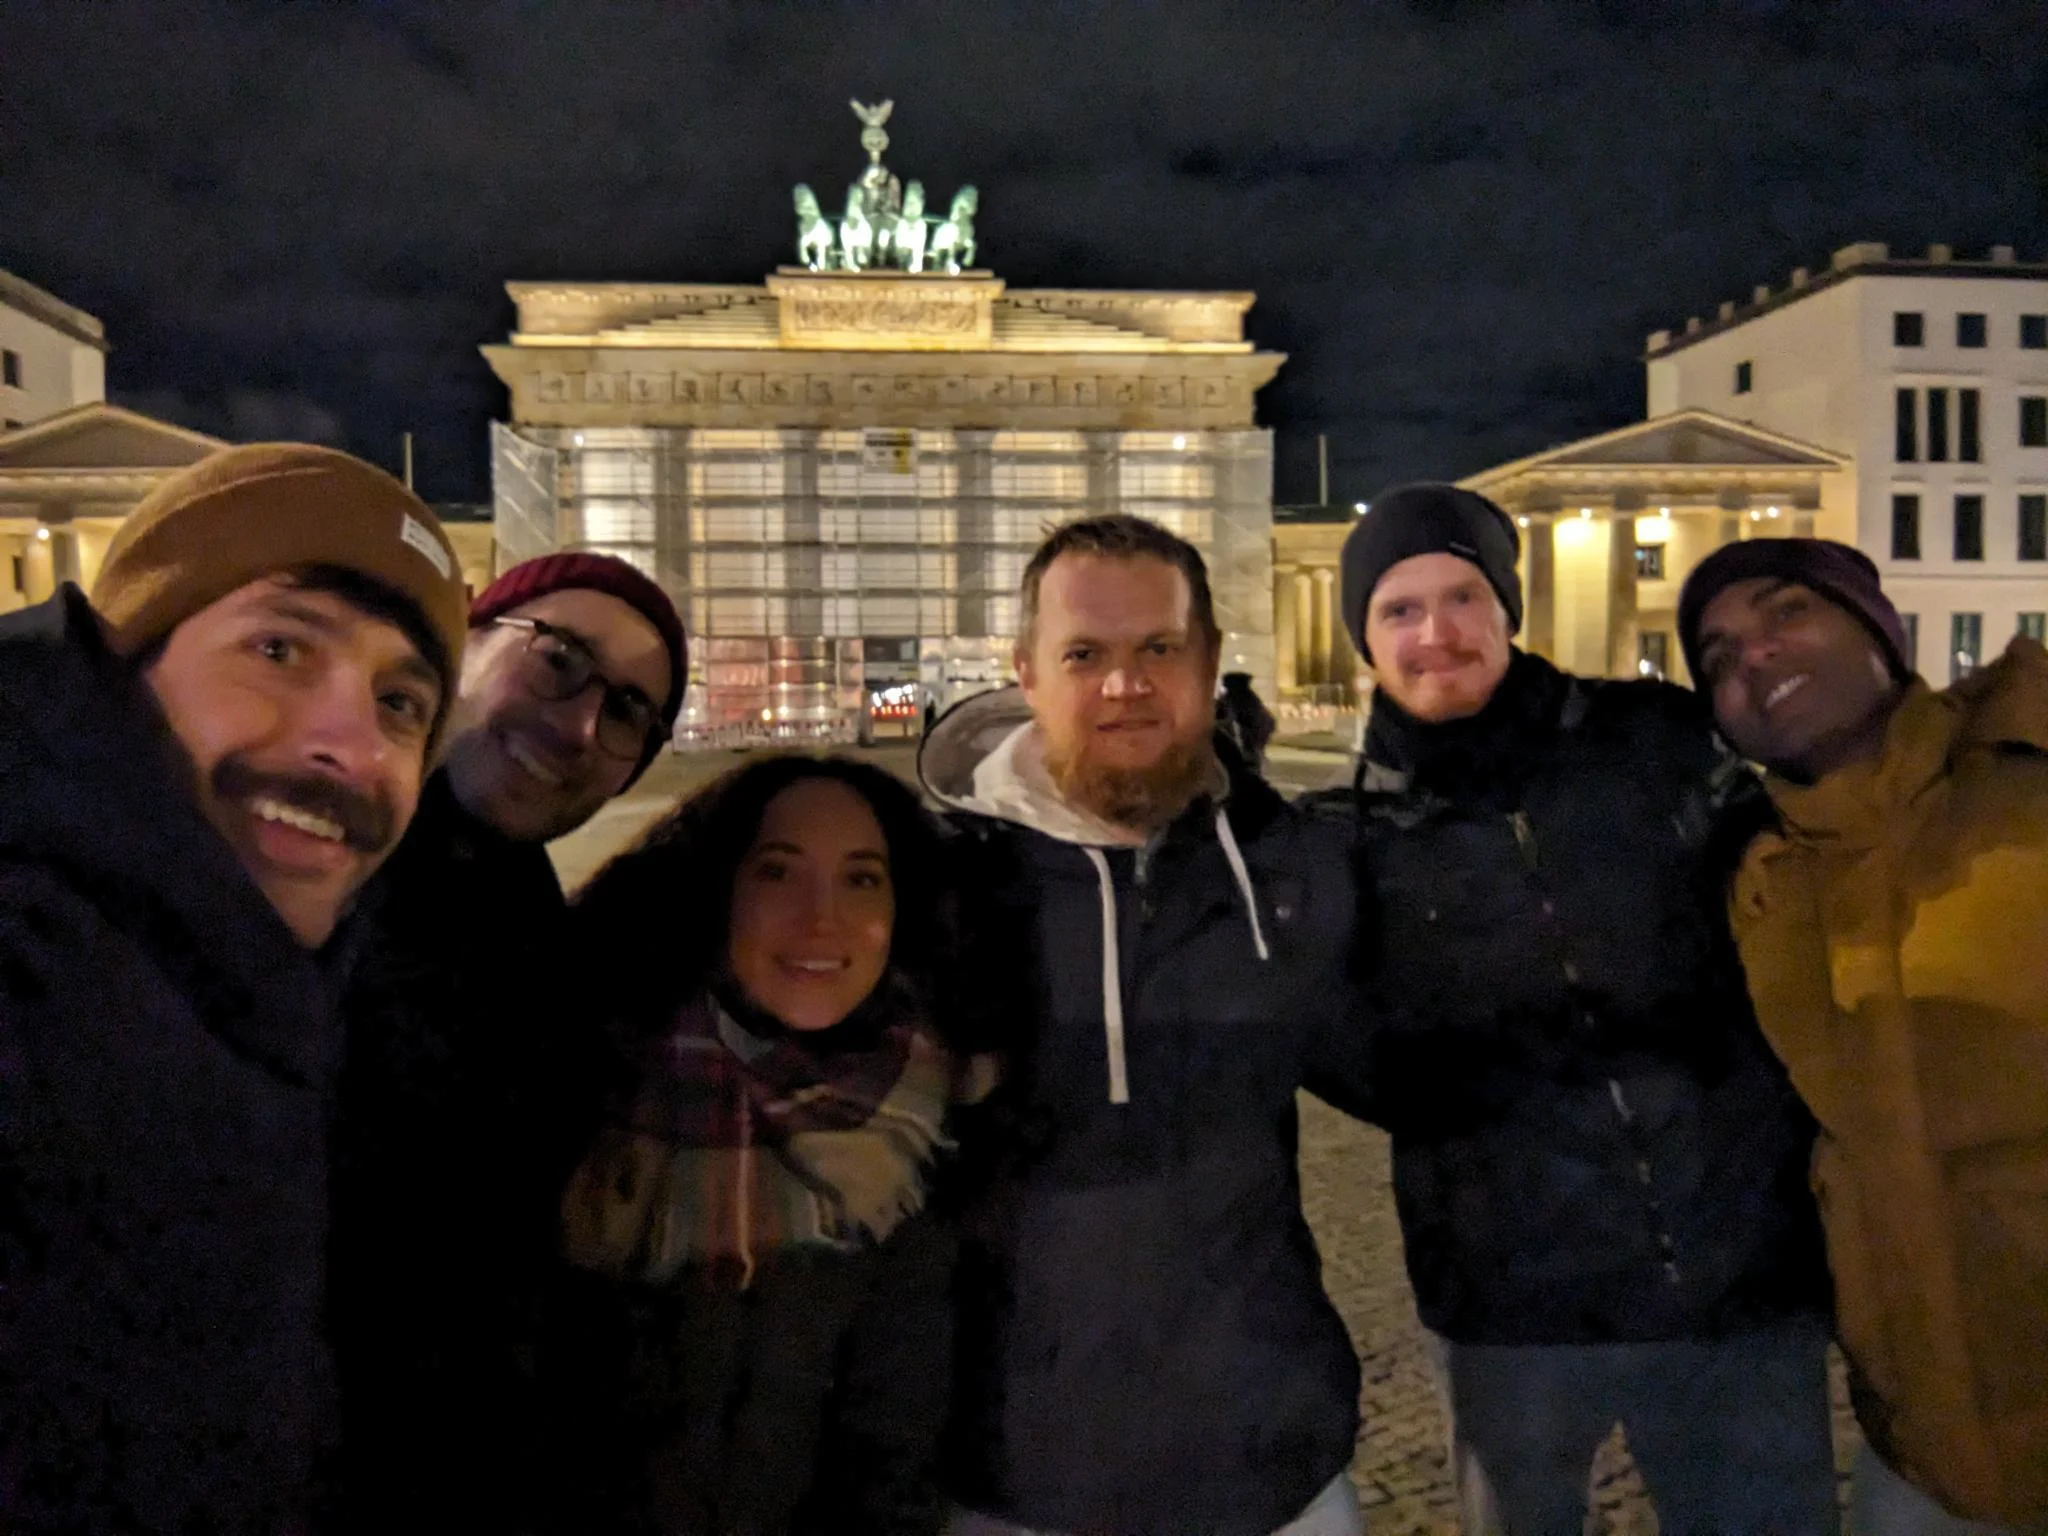 Engineering team event in Berlin